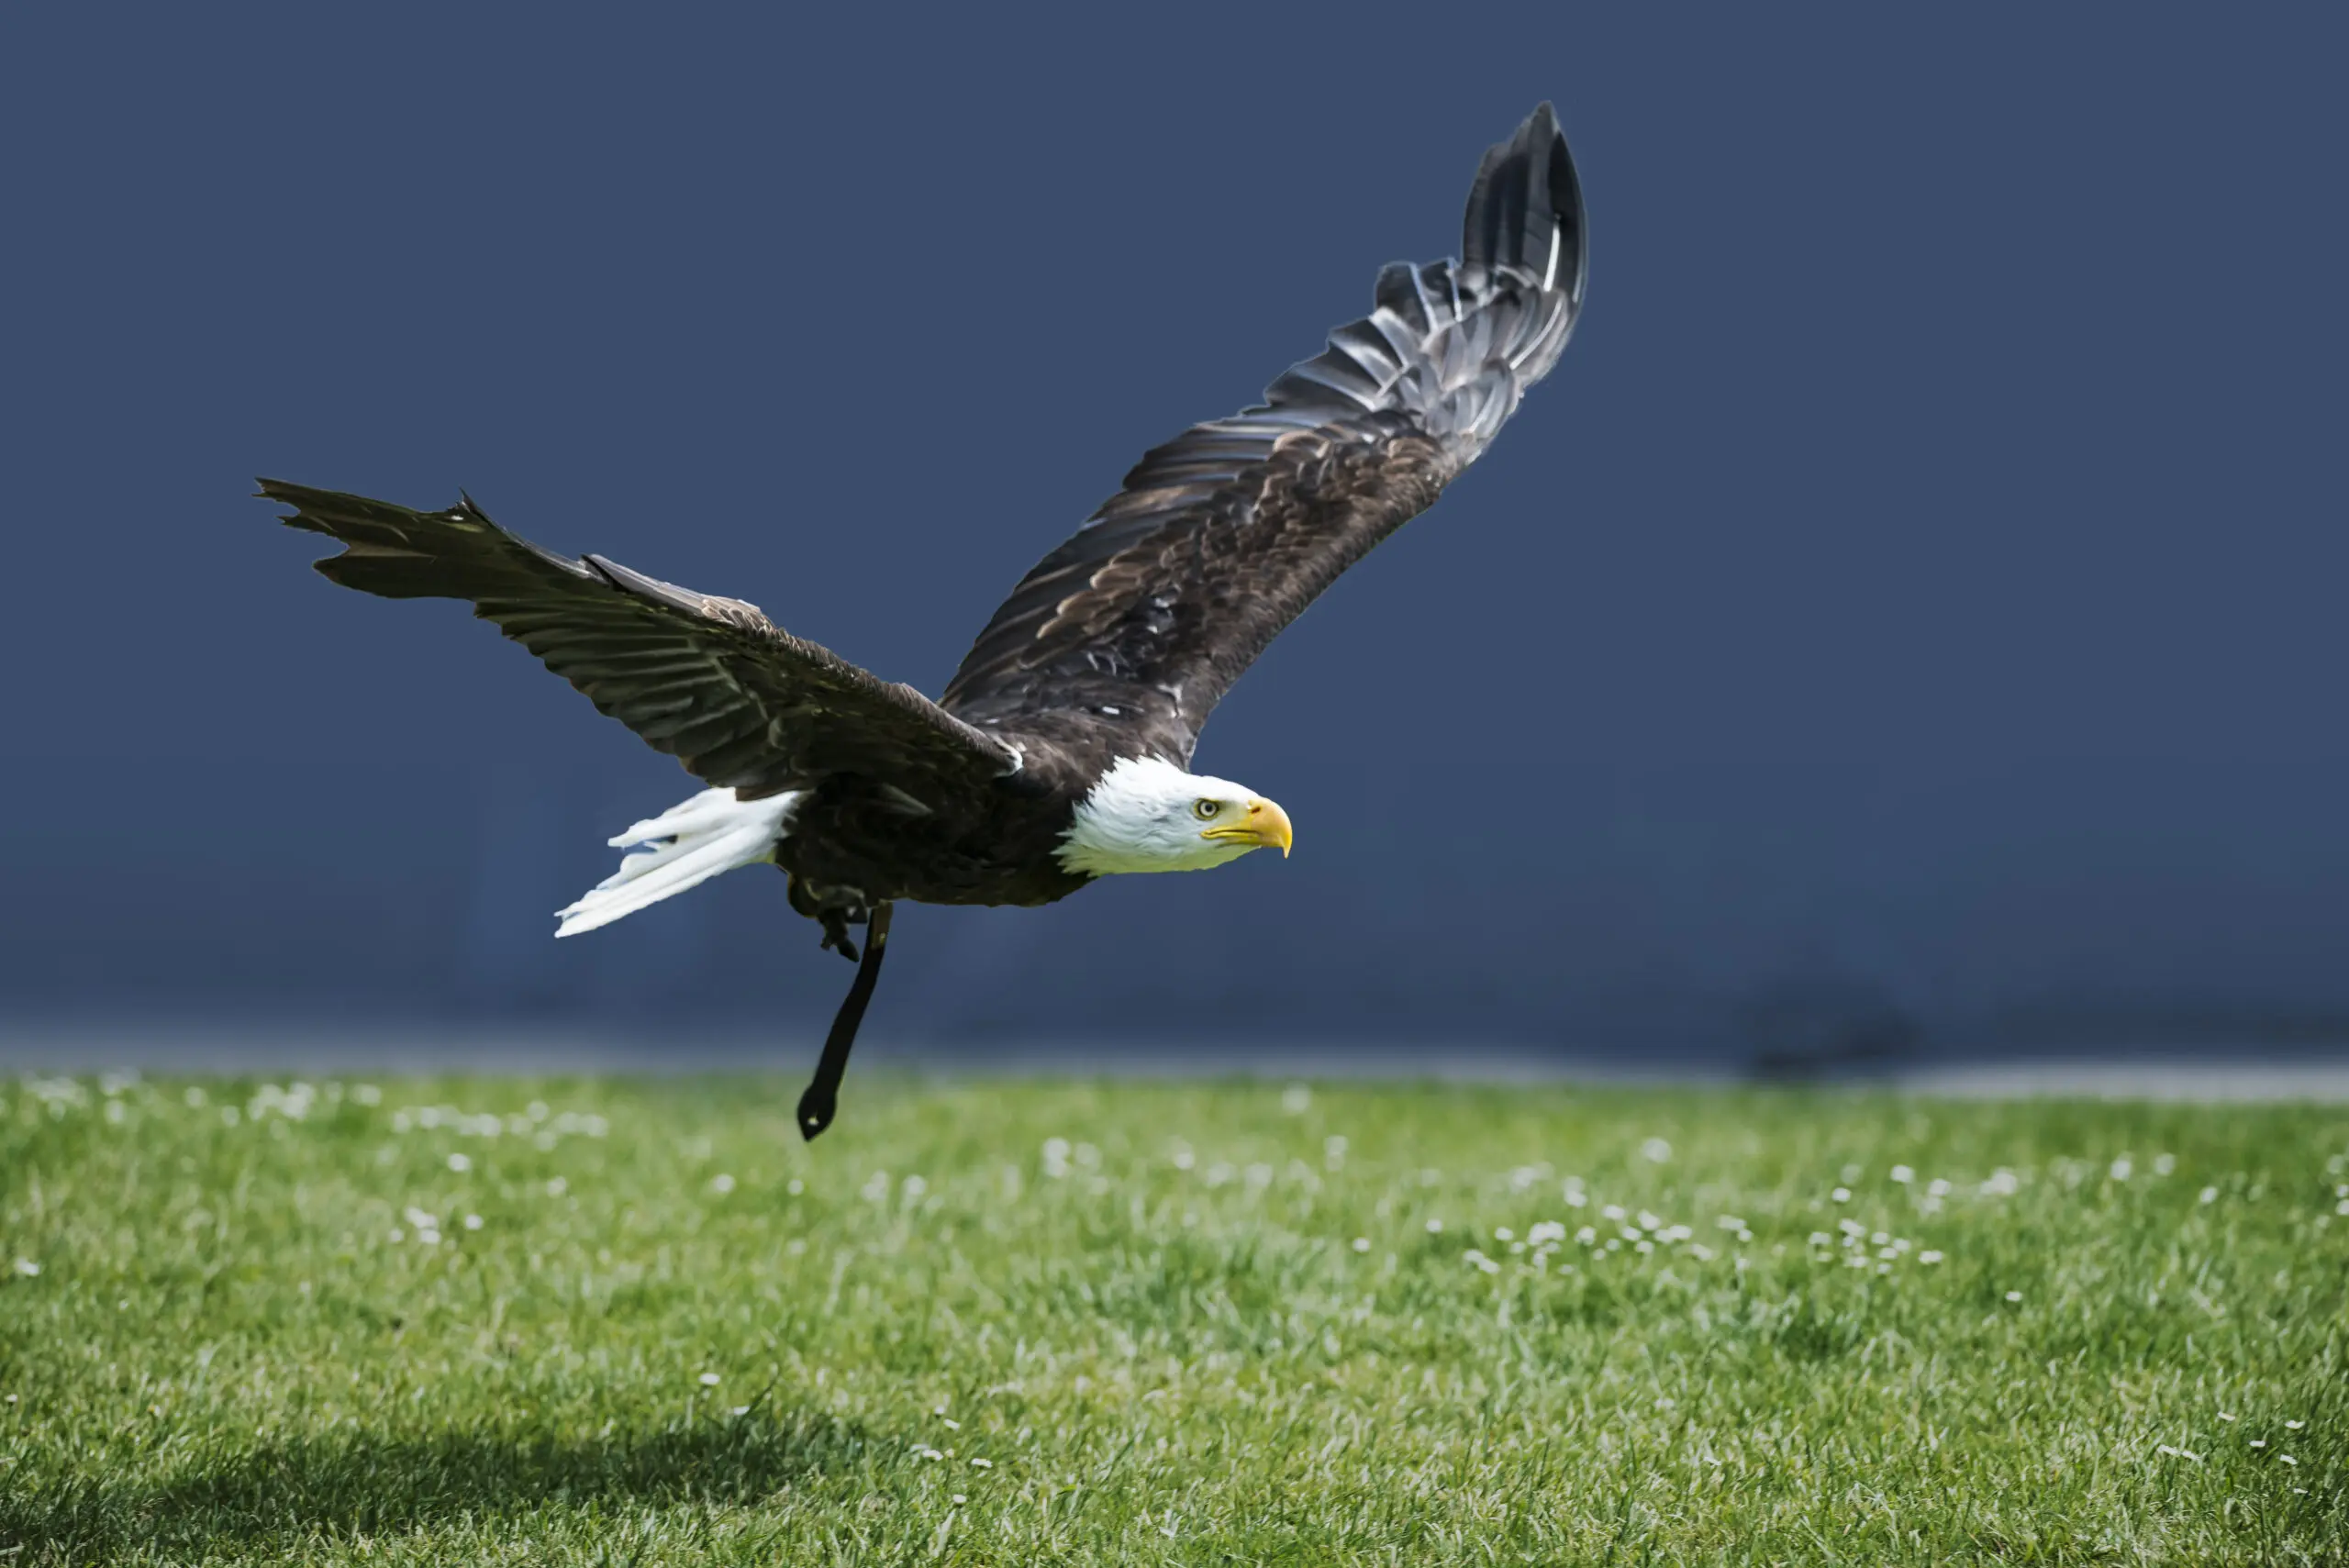 Wandbild (536) Flying Eagle präsentiert: Tiere,Vögel